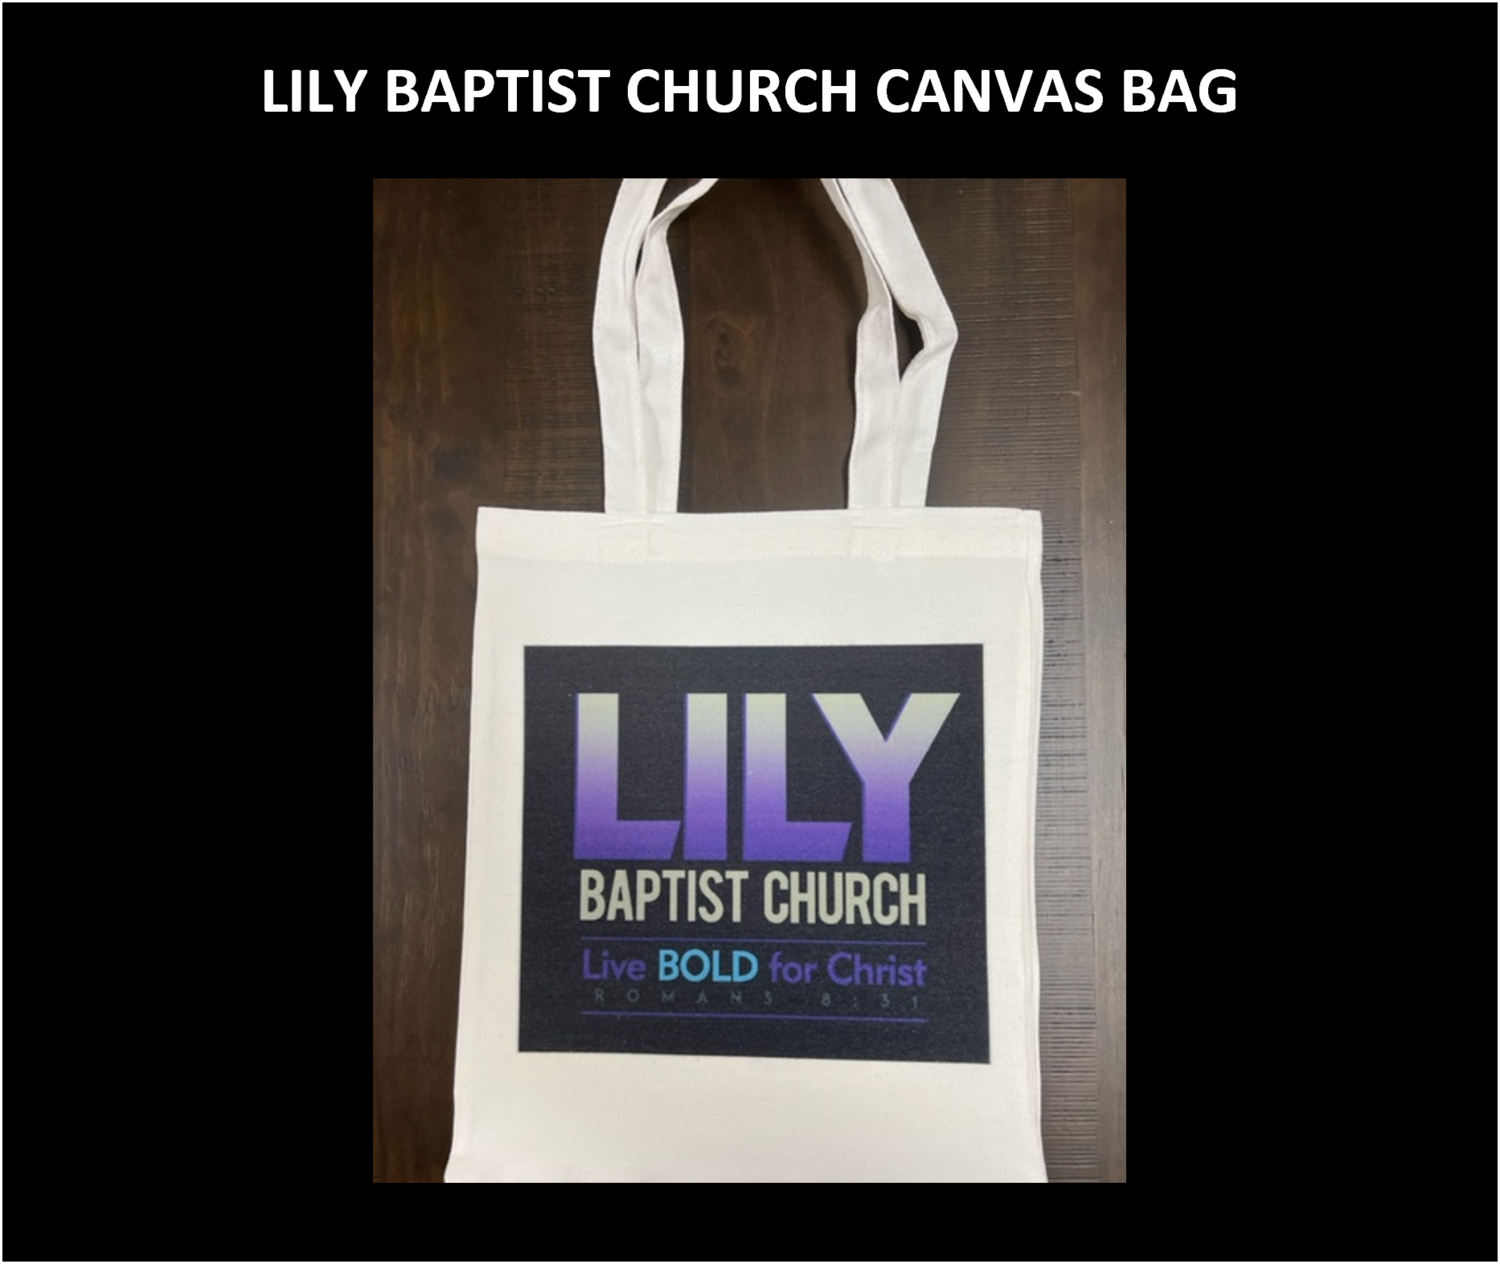 LILY BAPTIST CHURCH CANVAS BAG